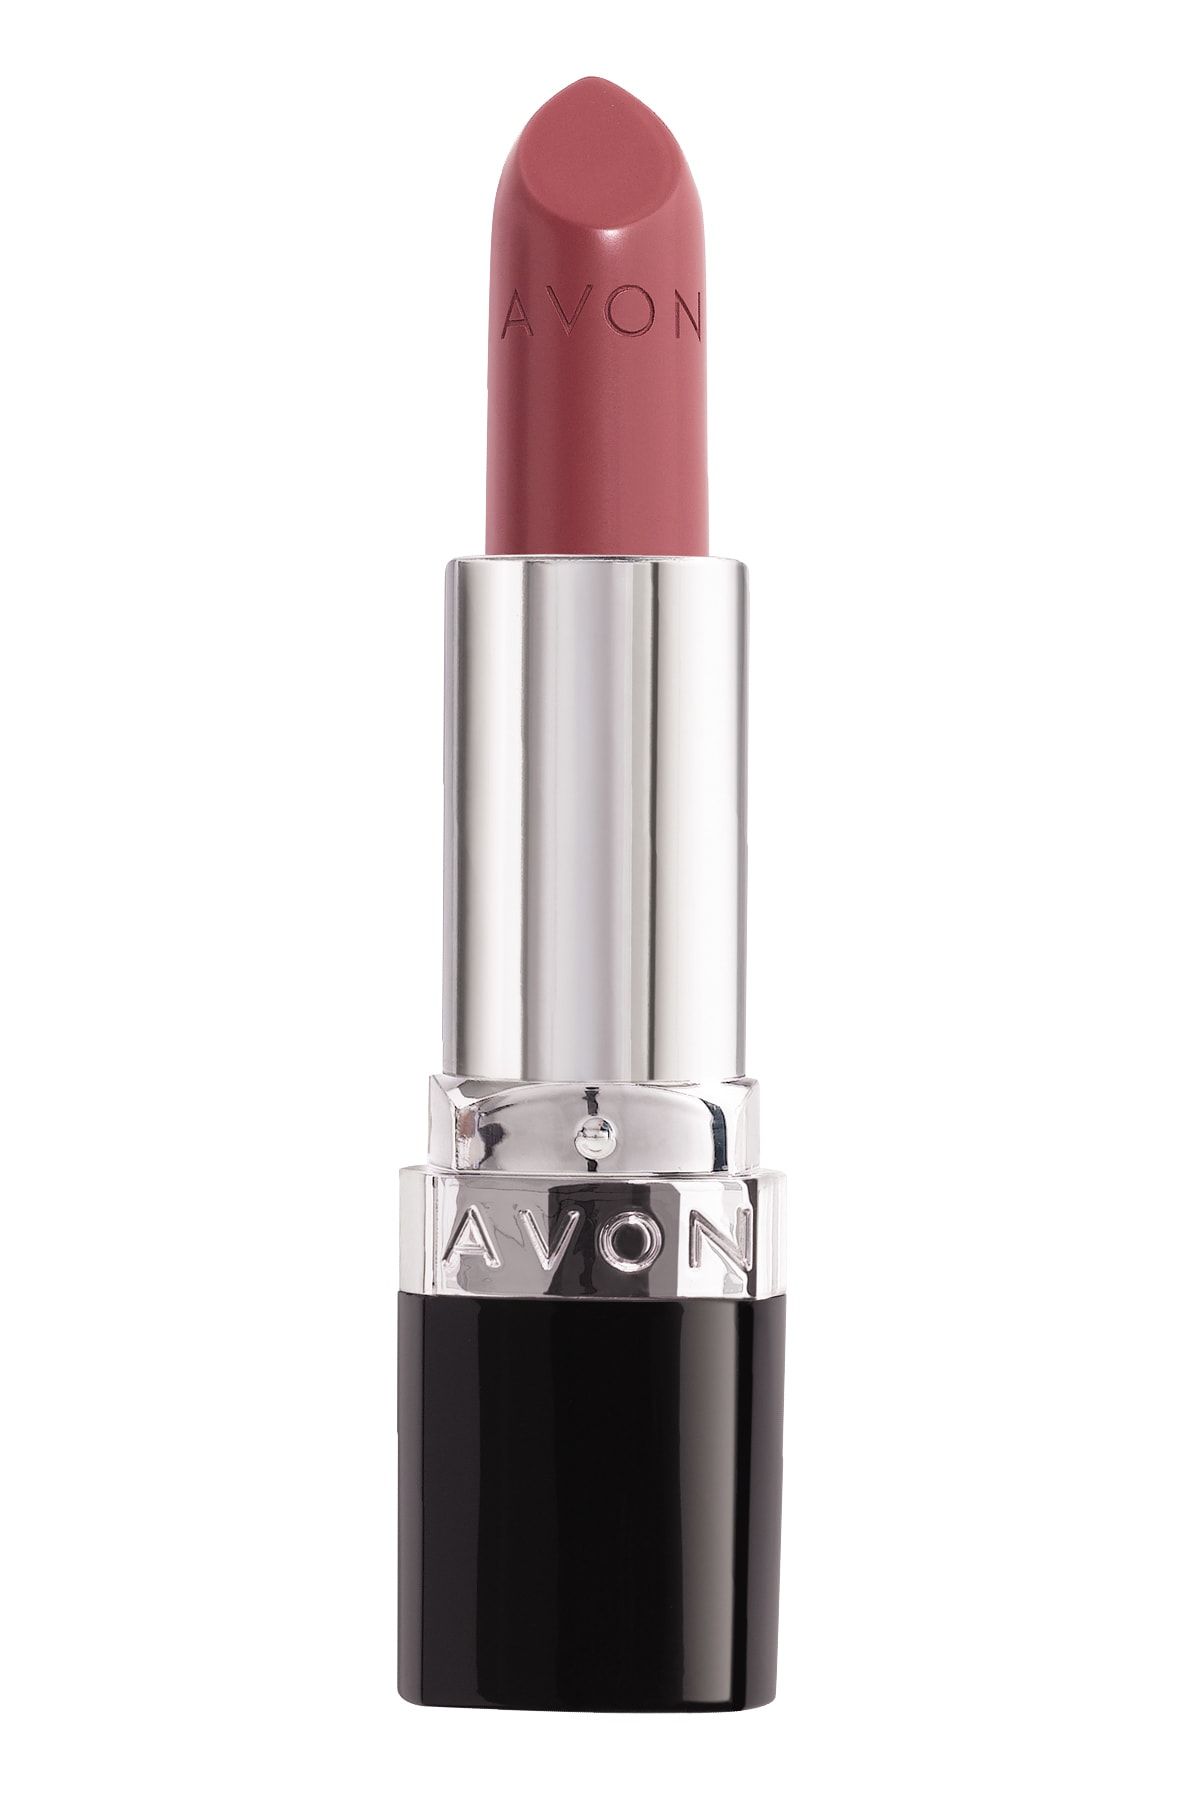 Avon Ultra Colour Ruj Toasted Rose 5050136595197